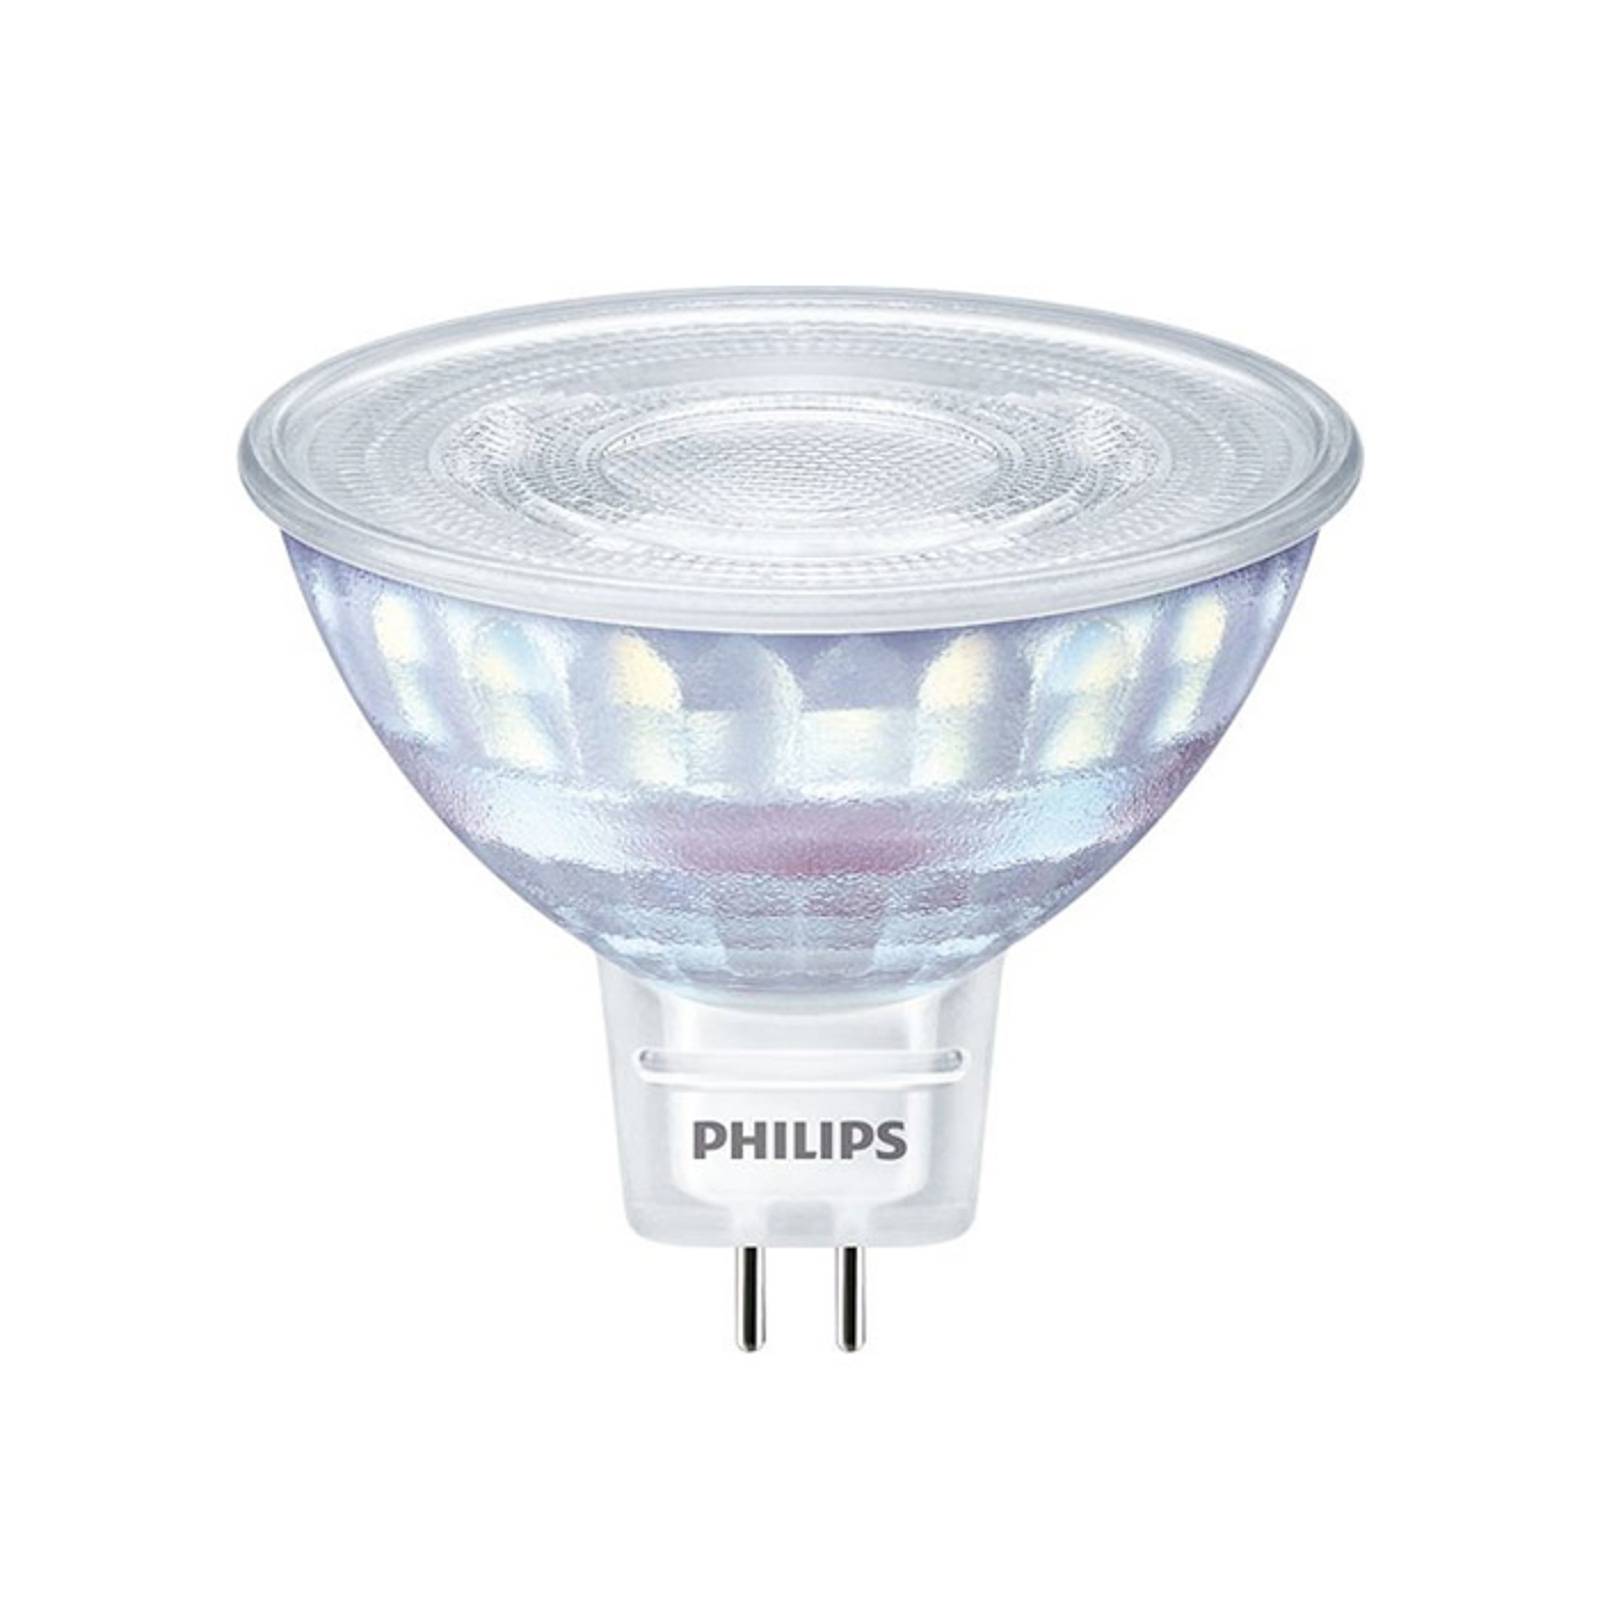 Philips Philips LED reflektor GU5,3 7W stmívací warmglow